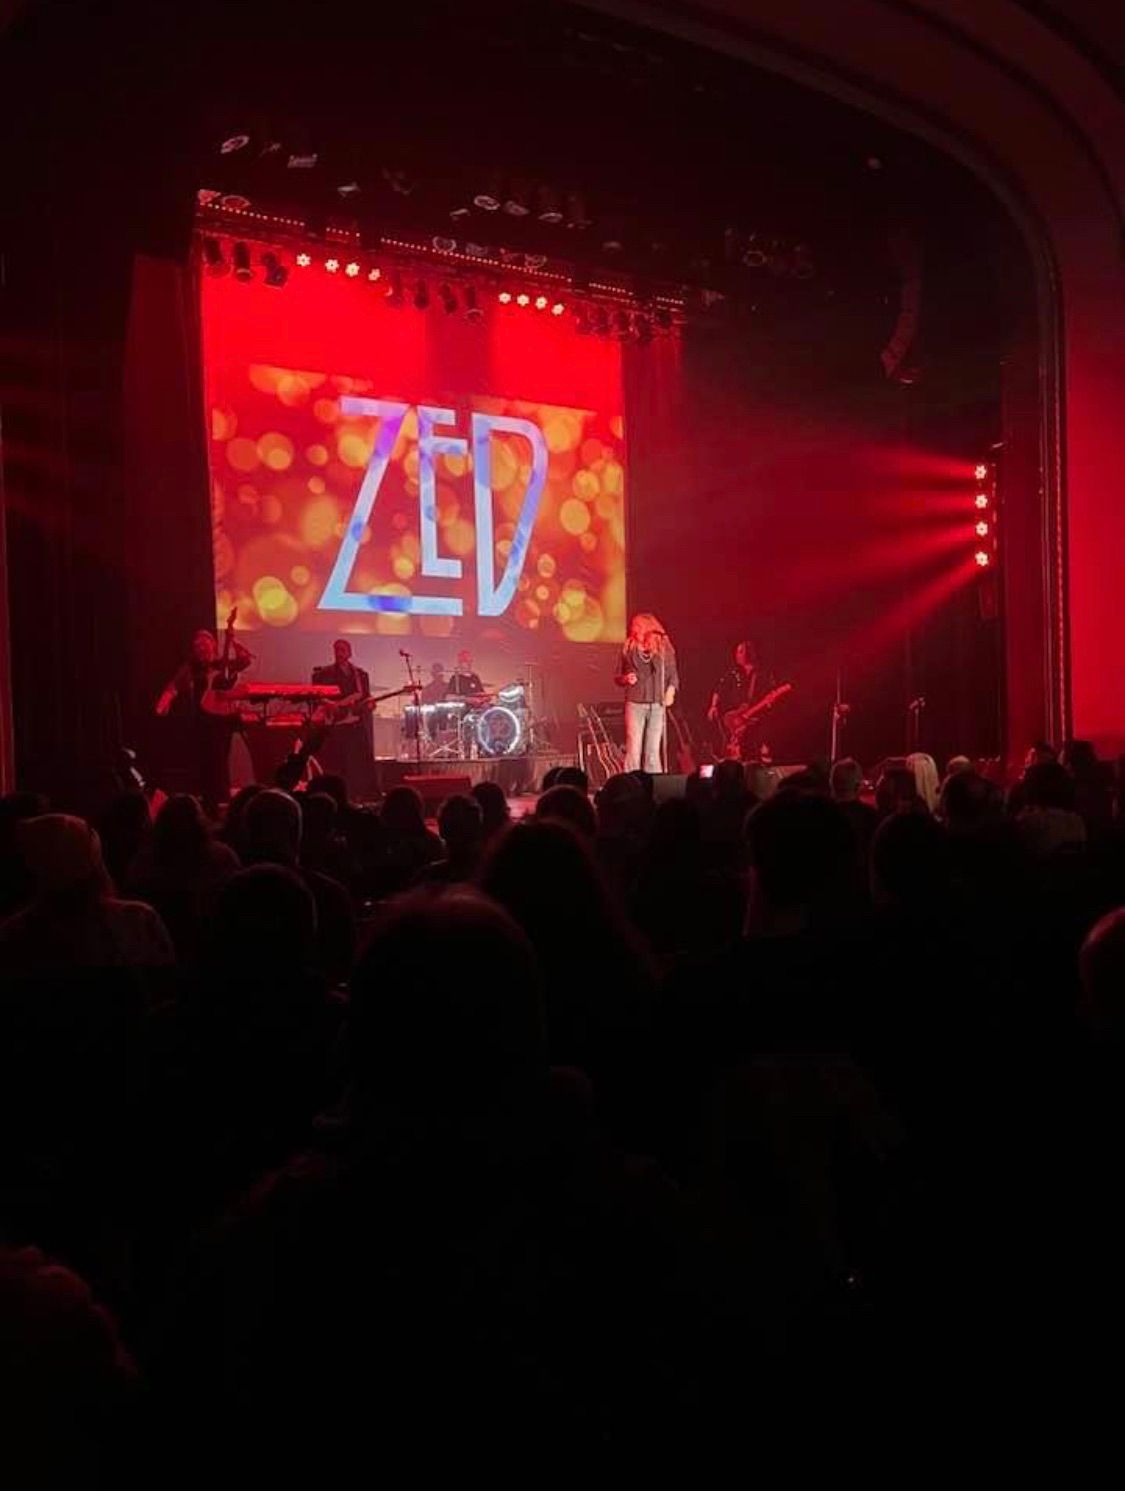 Zed - Led Zeppelin Tribute at Fergus Grand Theatre